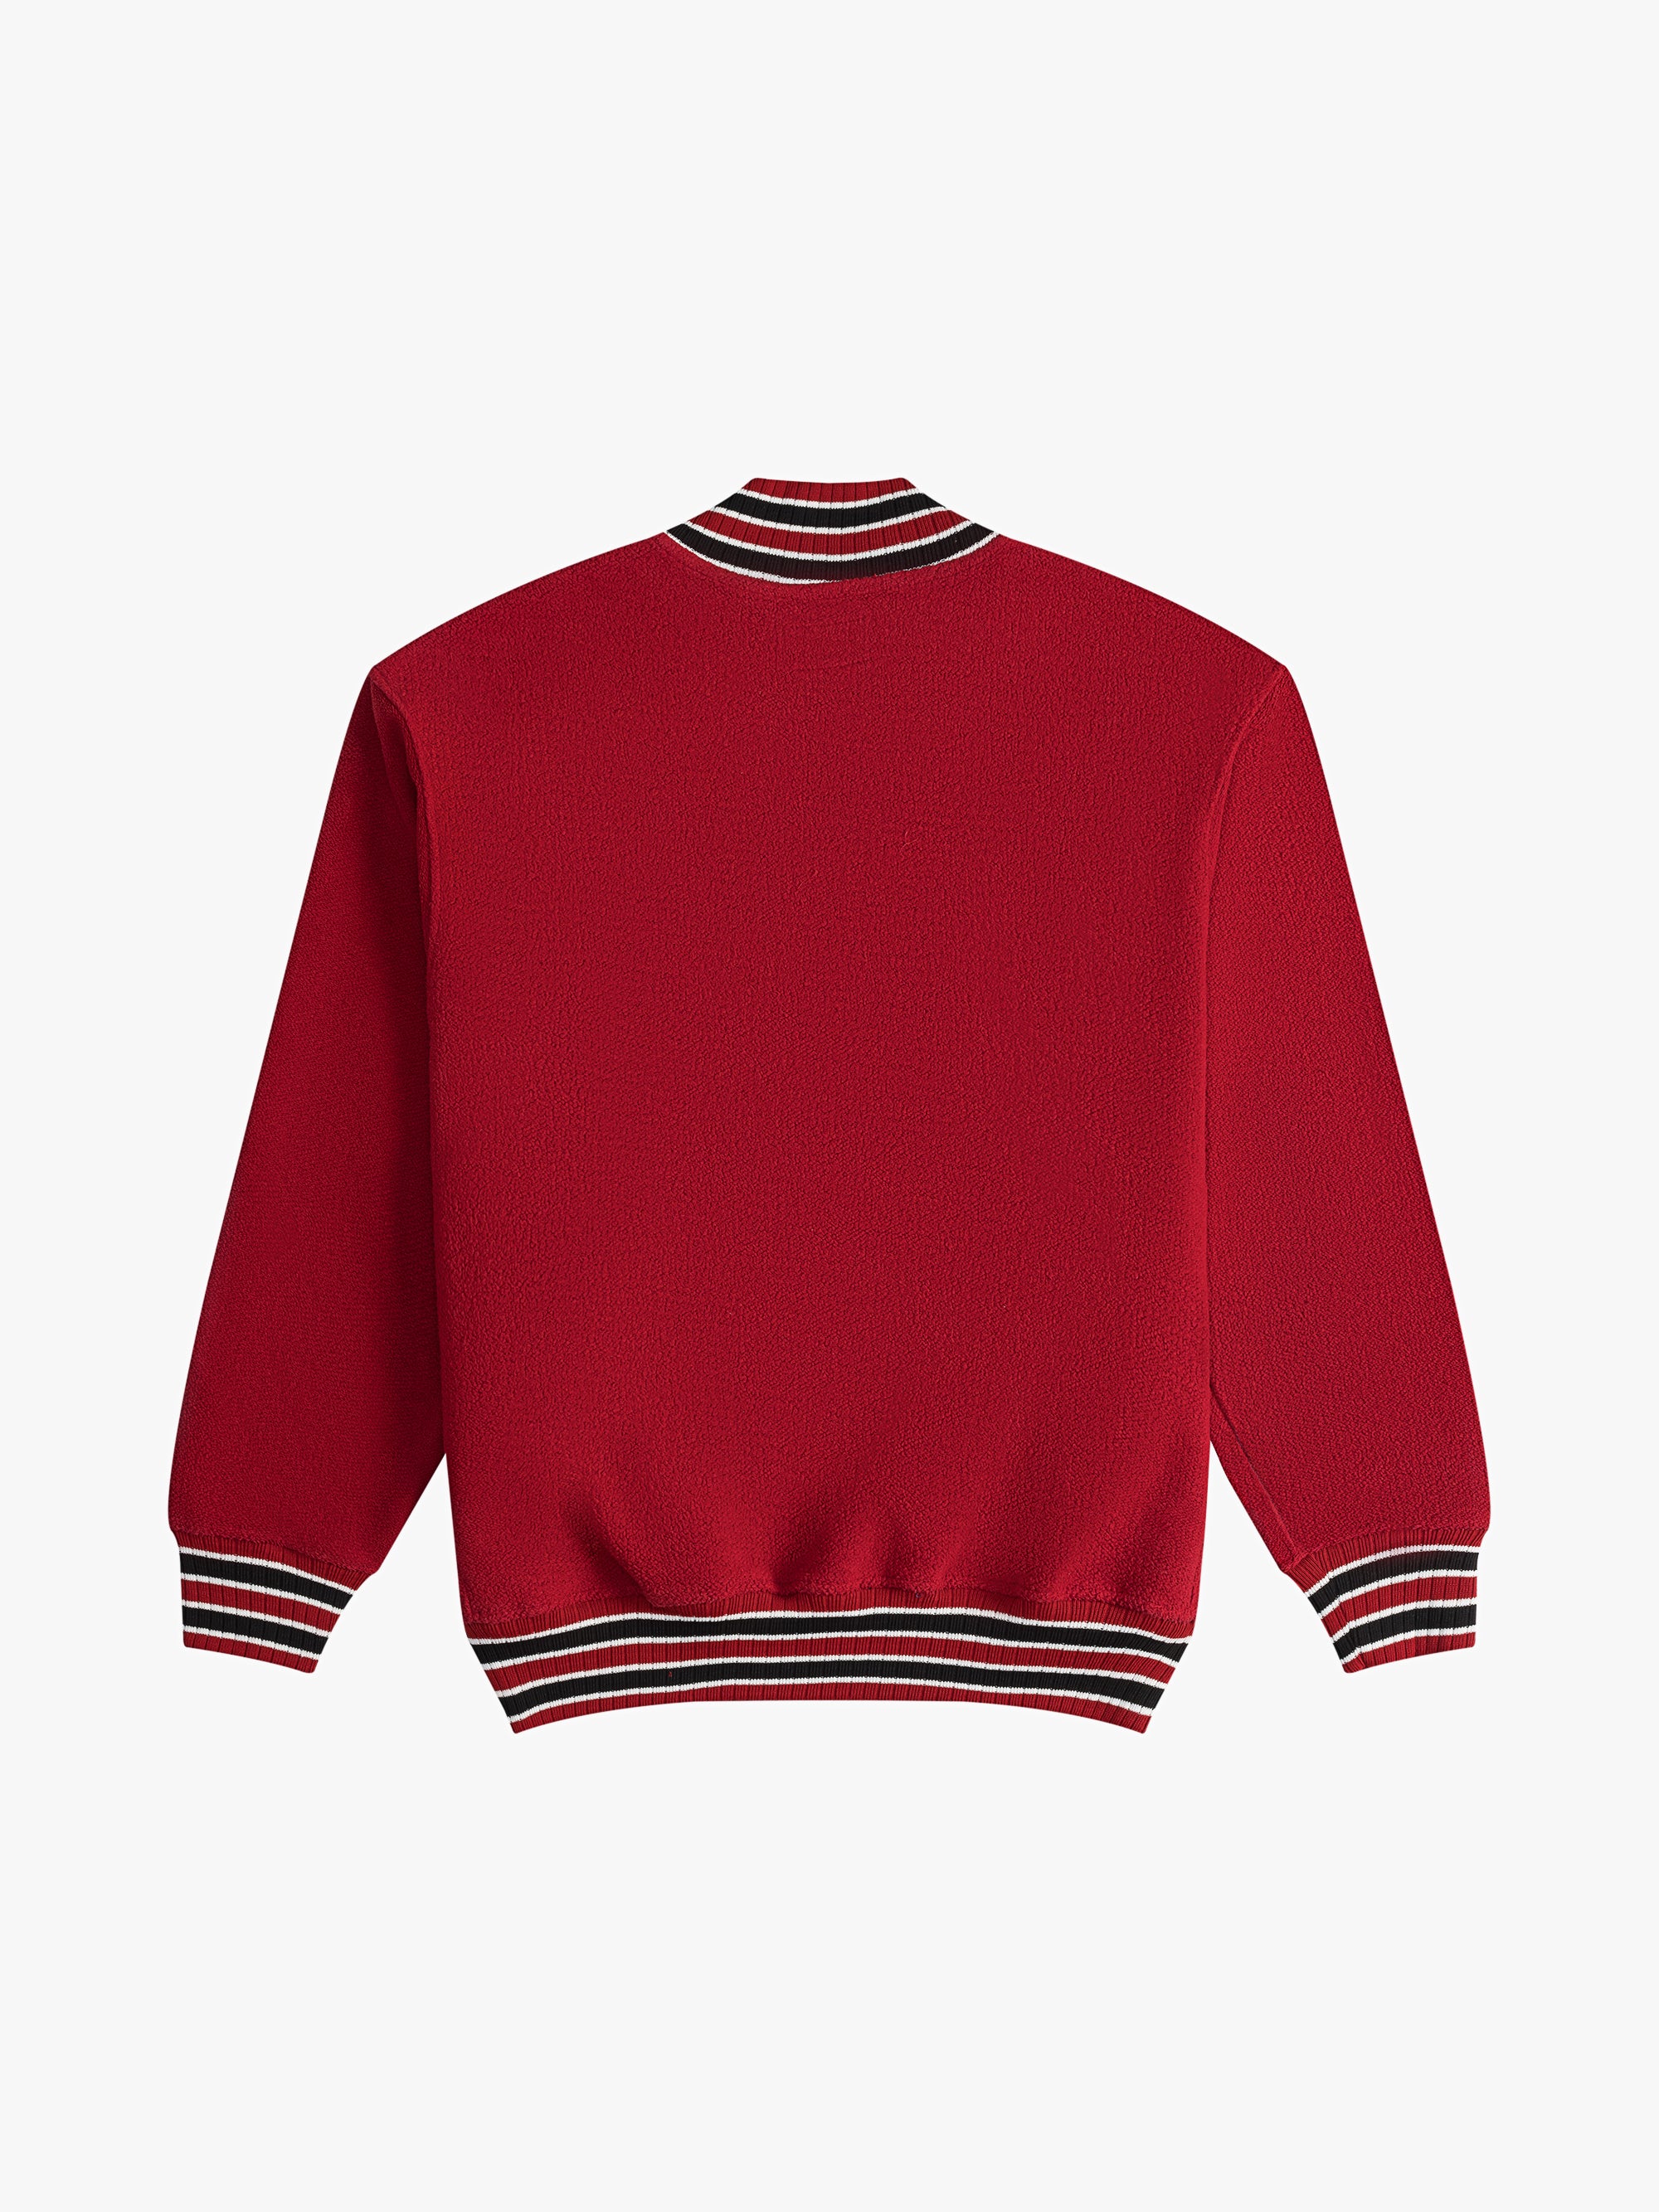 Rhude Red & Off-White Paneled Sweatshirt